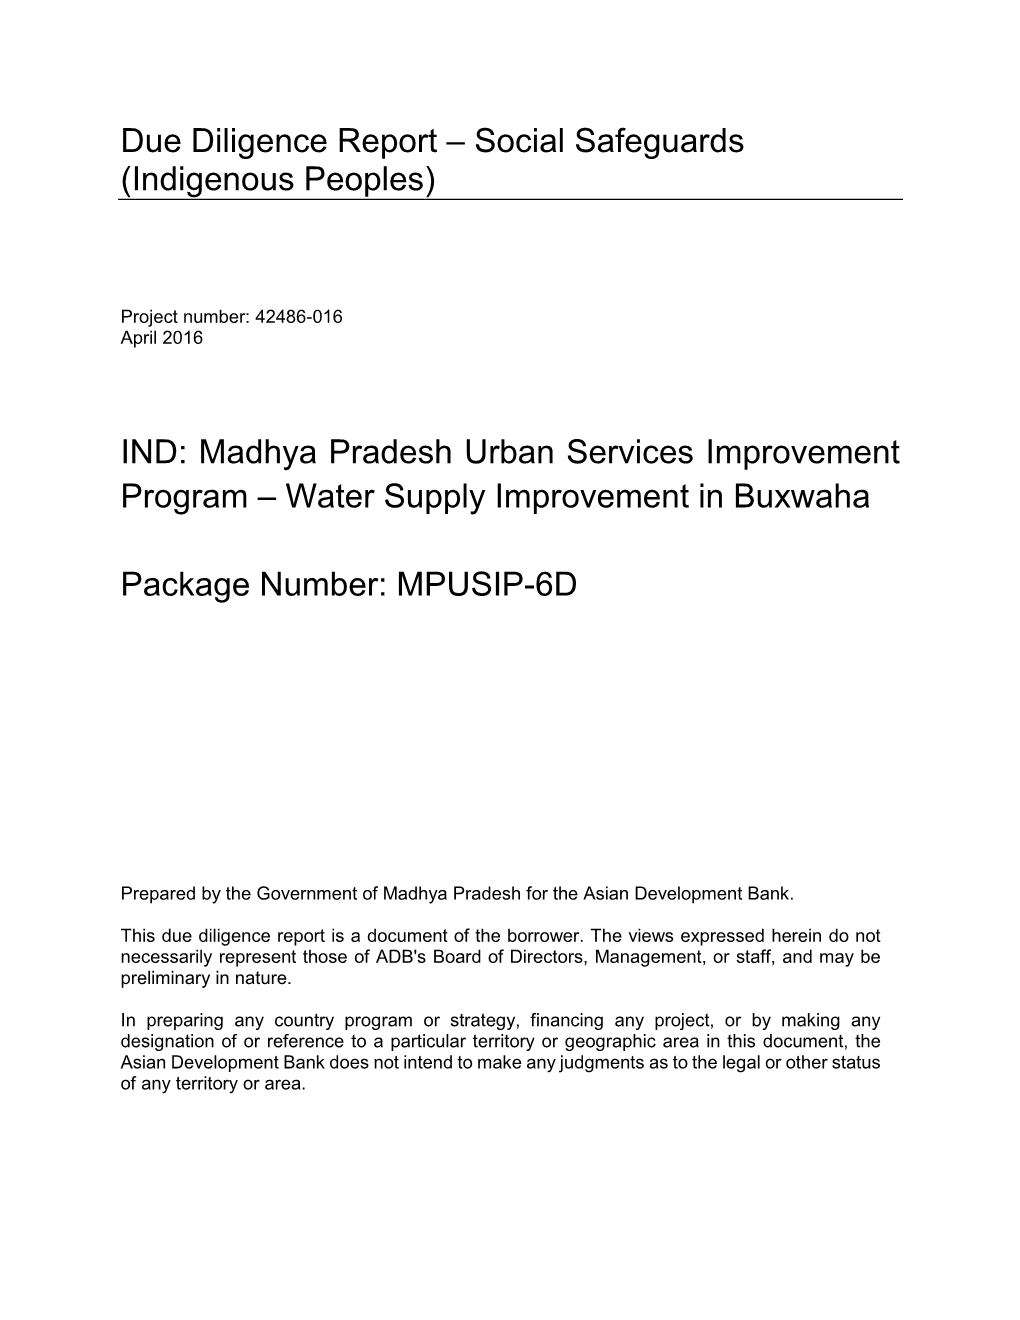 Madhya Pradesh Urban Services Improvement Program – Water Supply Improvement in Buxwaha